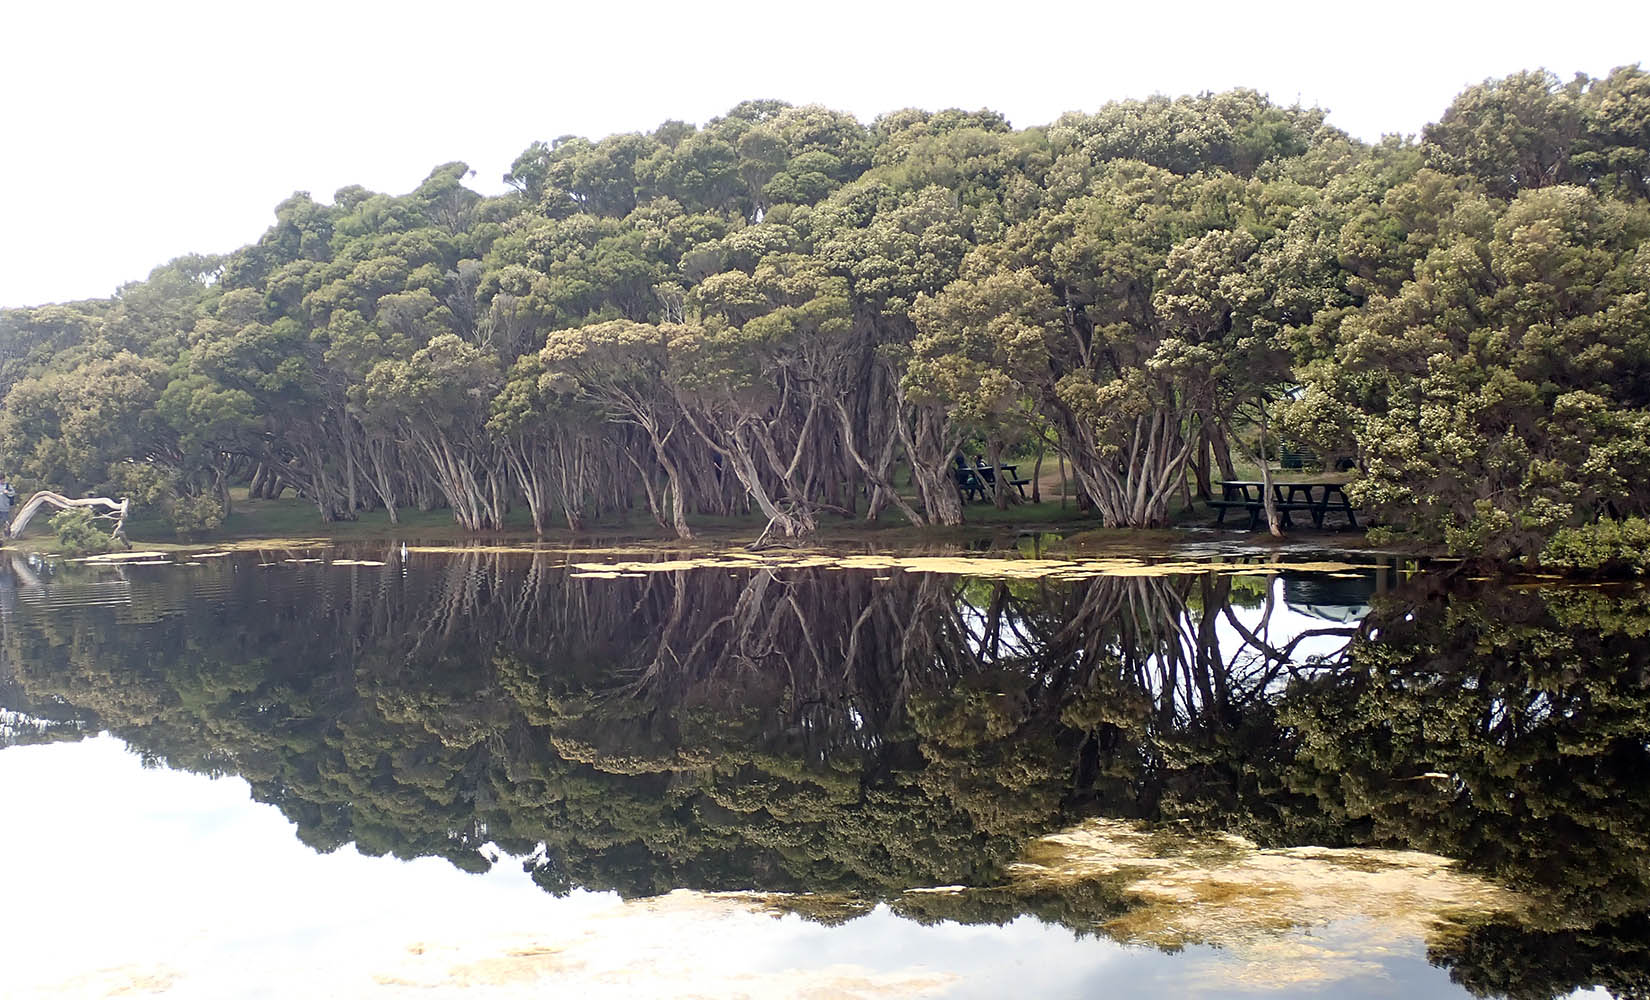 melaleuca-halmaturorum-kangaroo-island-trees-reflection